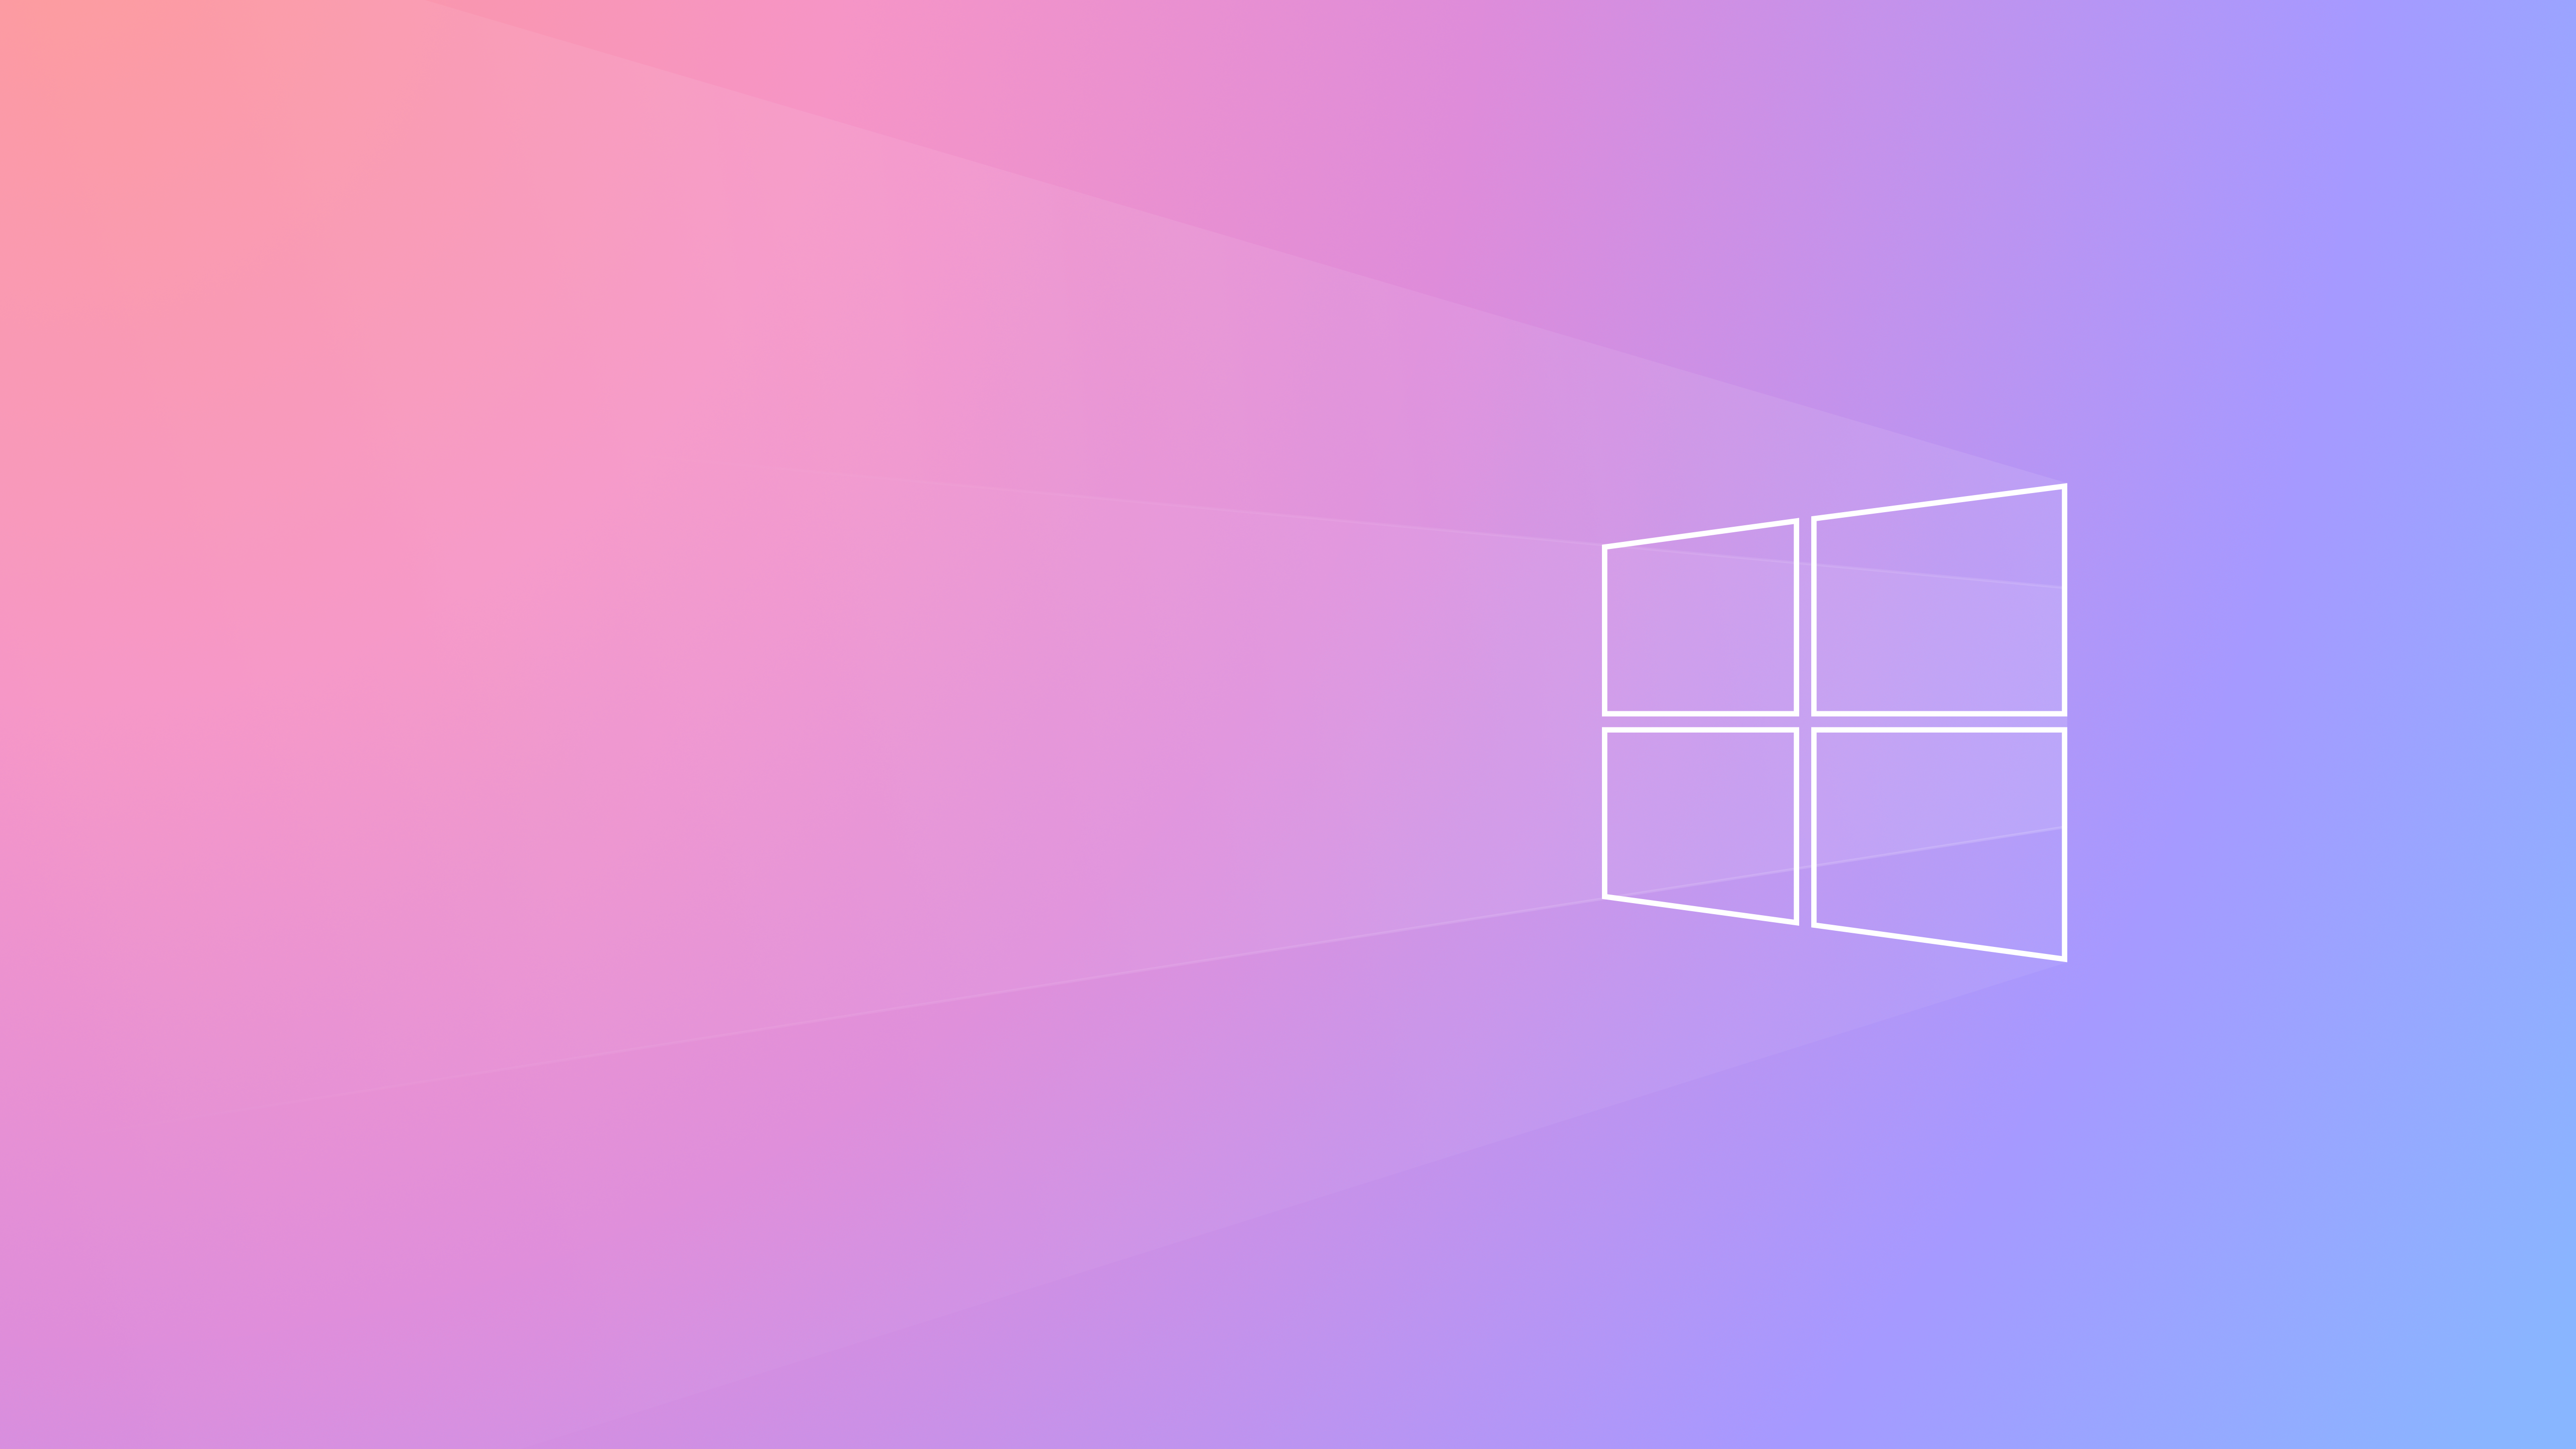 Windows 10 default wallpaper light purple 4k by dpcdpc11